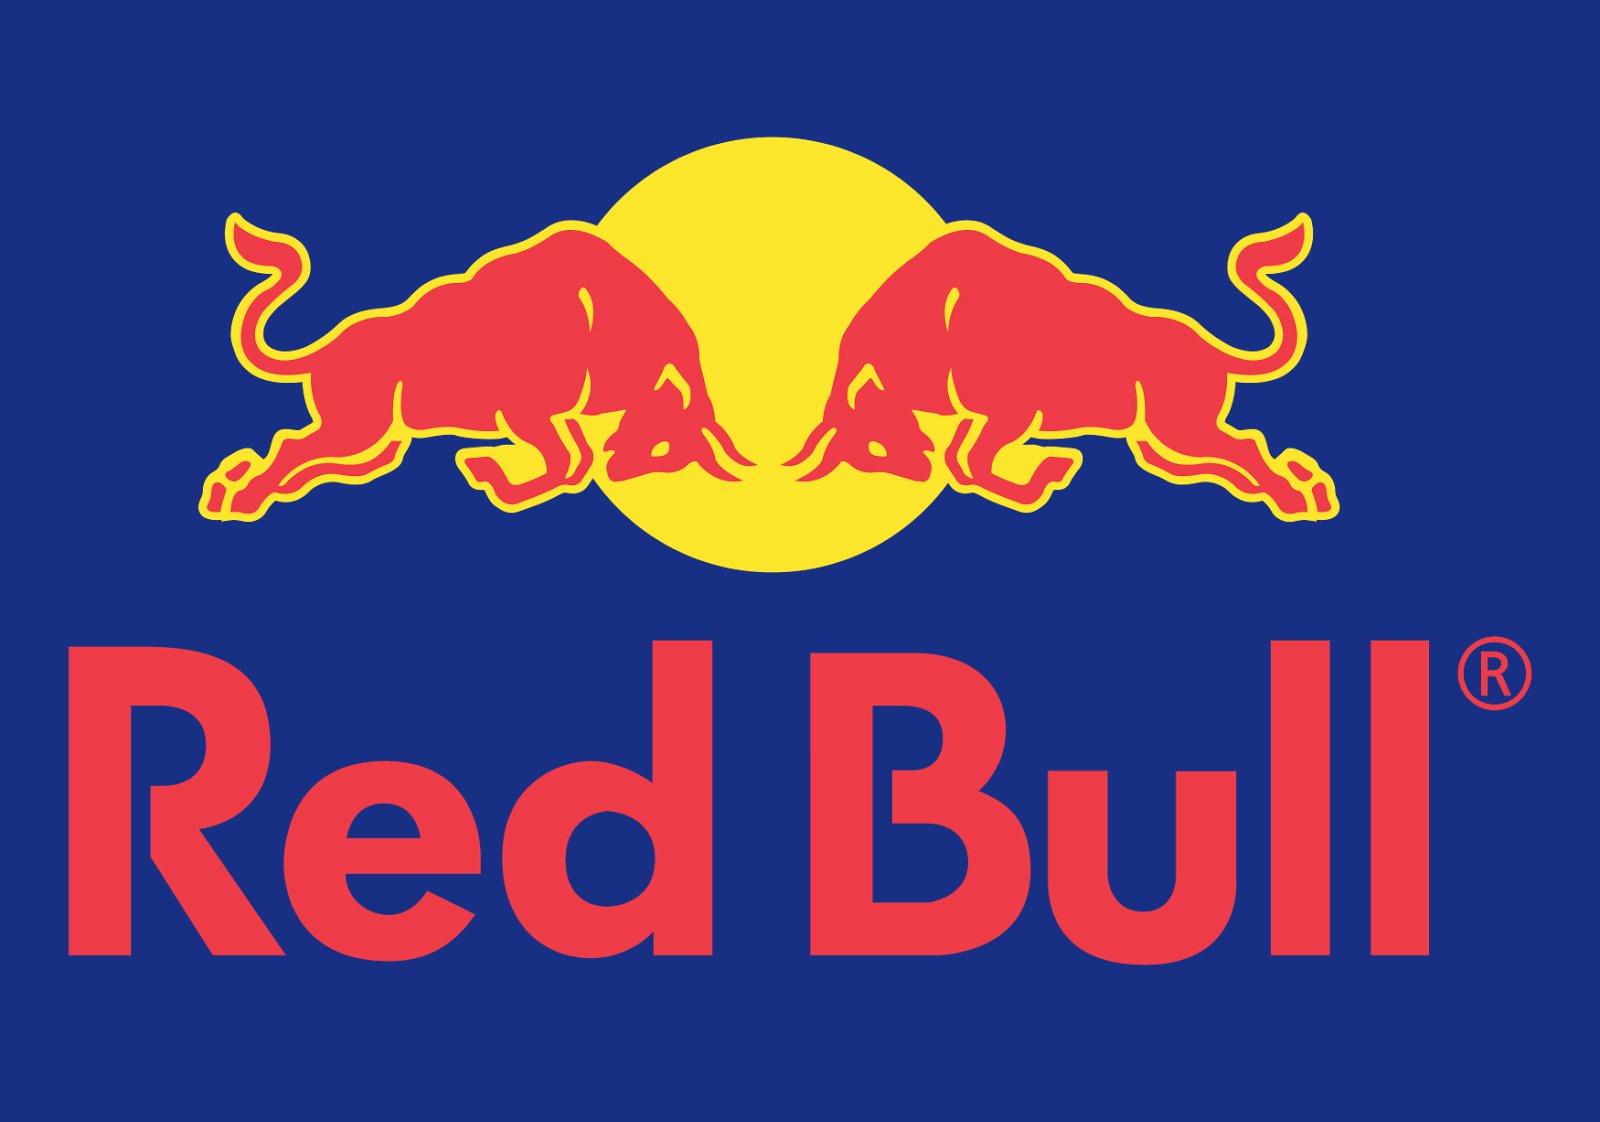 Red-Bull-emblems